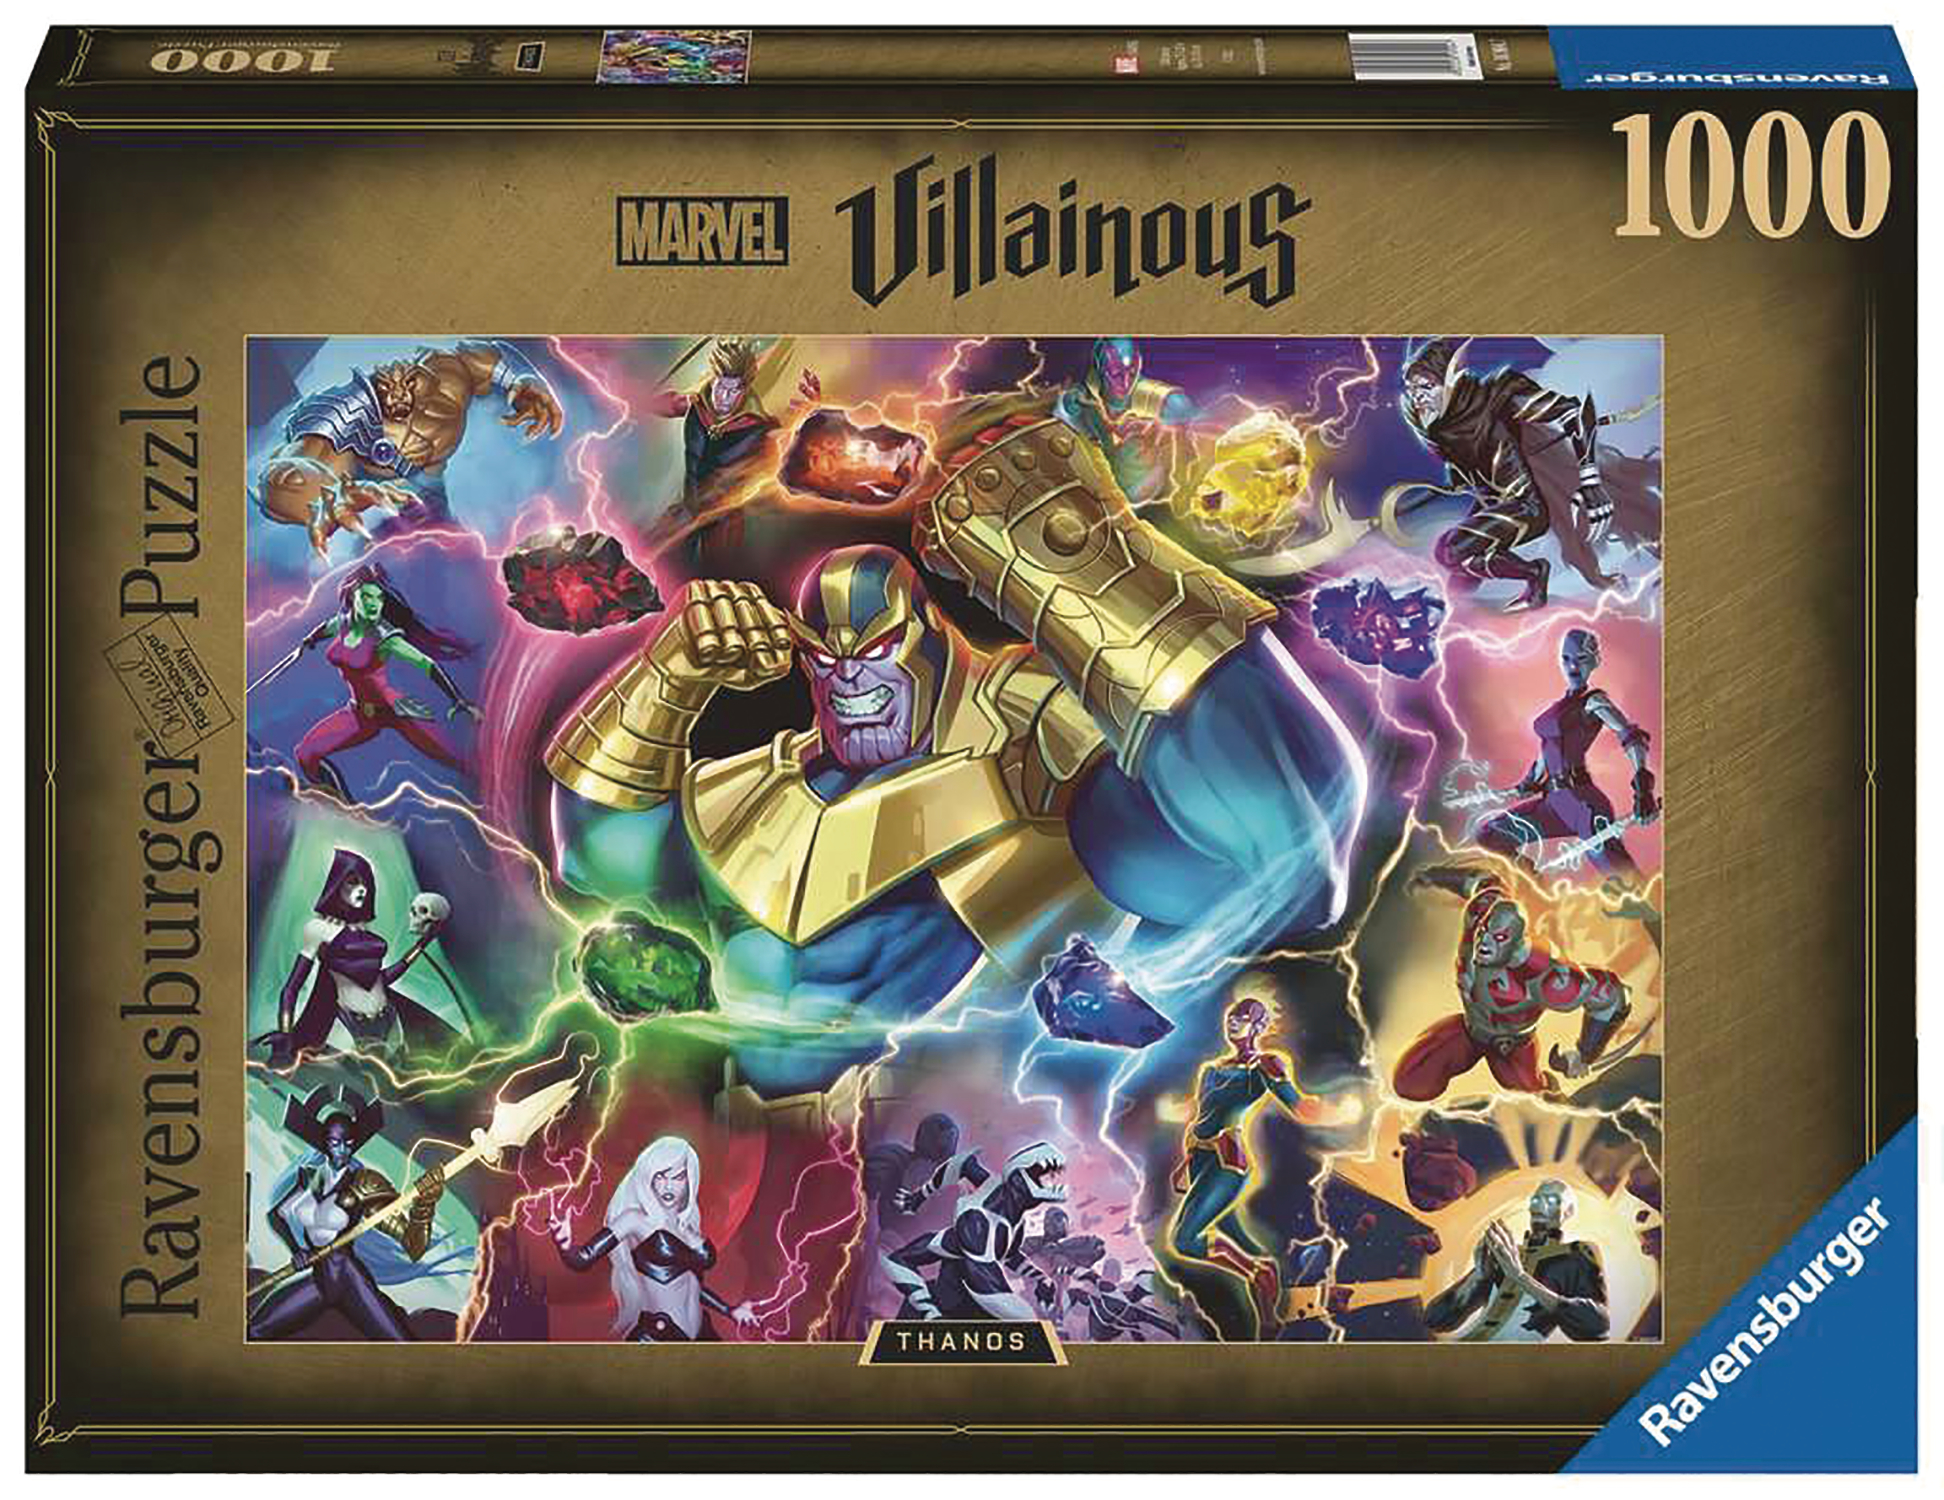 Marvel Villainous 1000 Piece Puzzle: Thanos